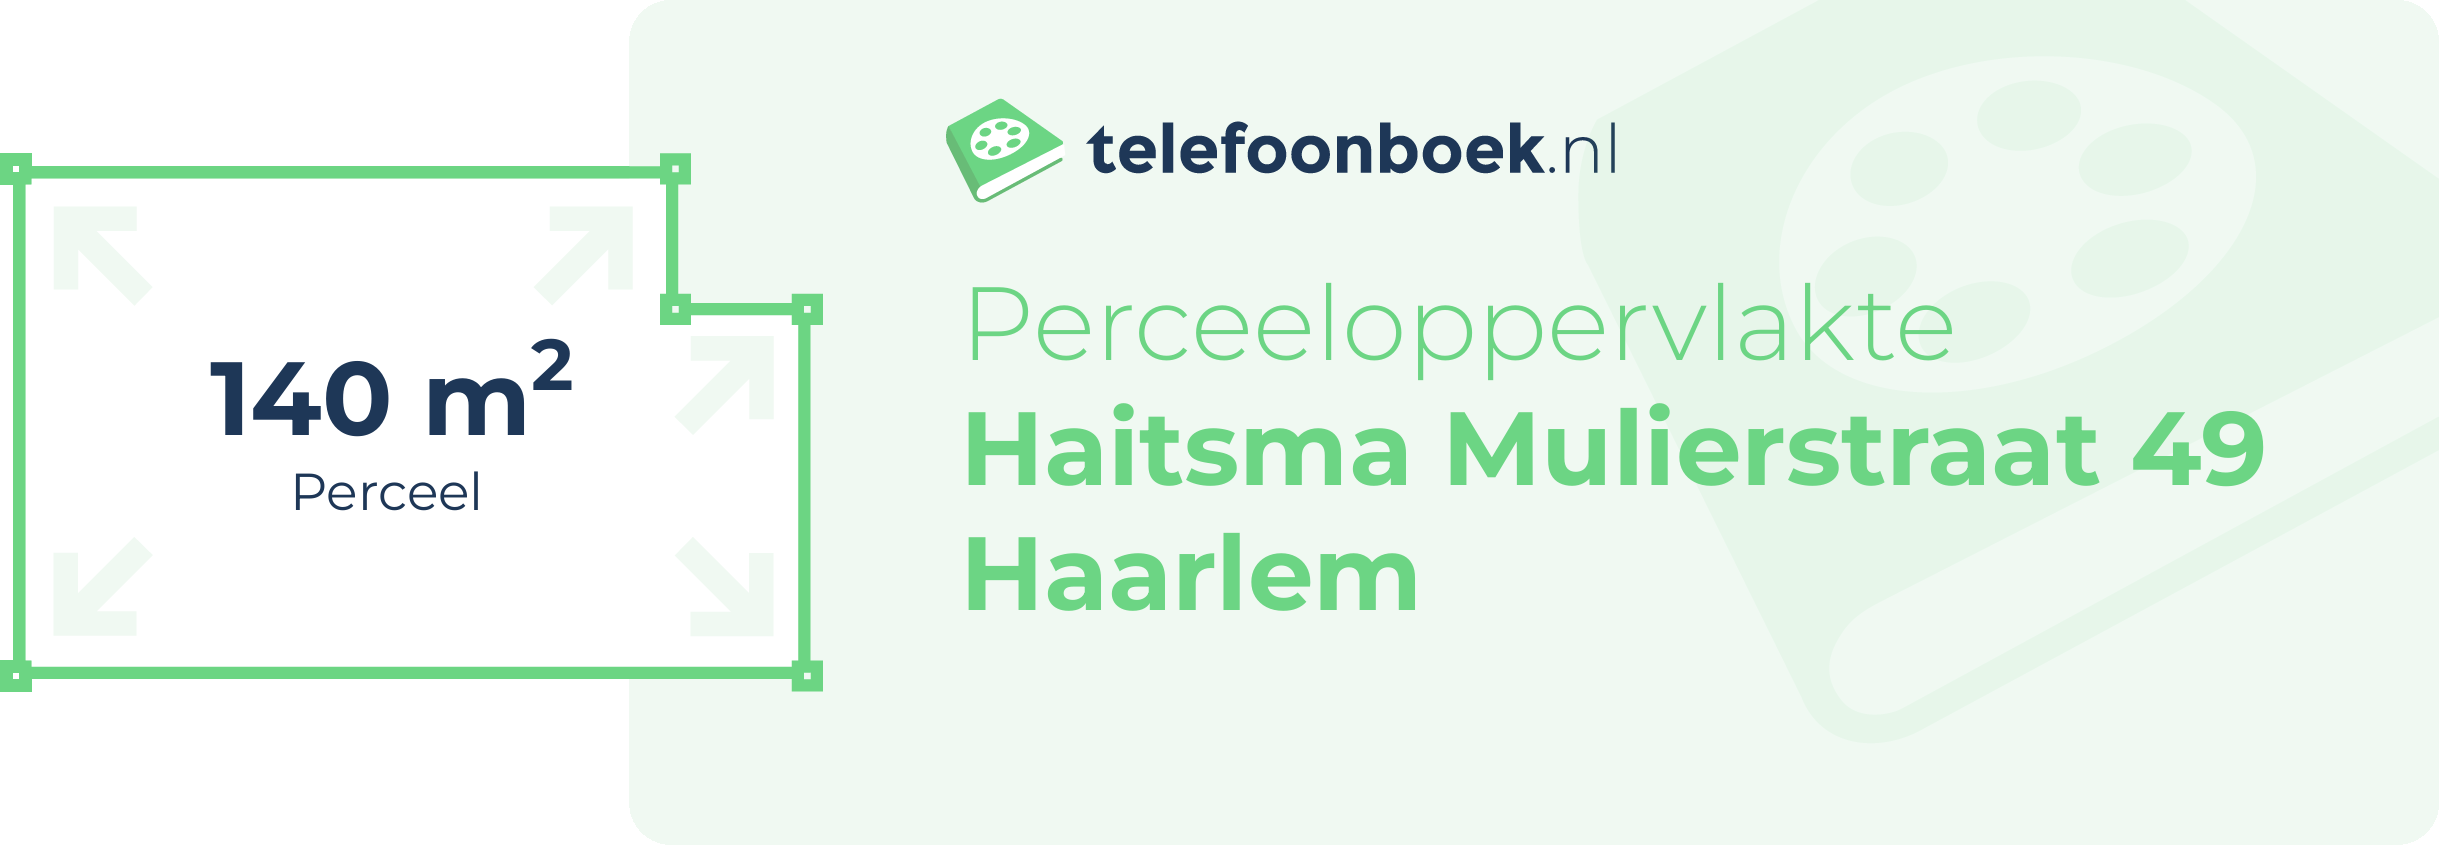 Perceeloppervlakte Haitsma Mulierstraat 49 Haarlem